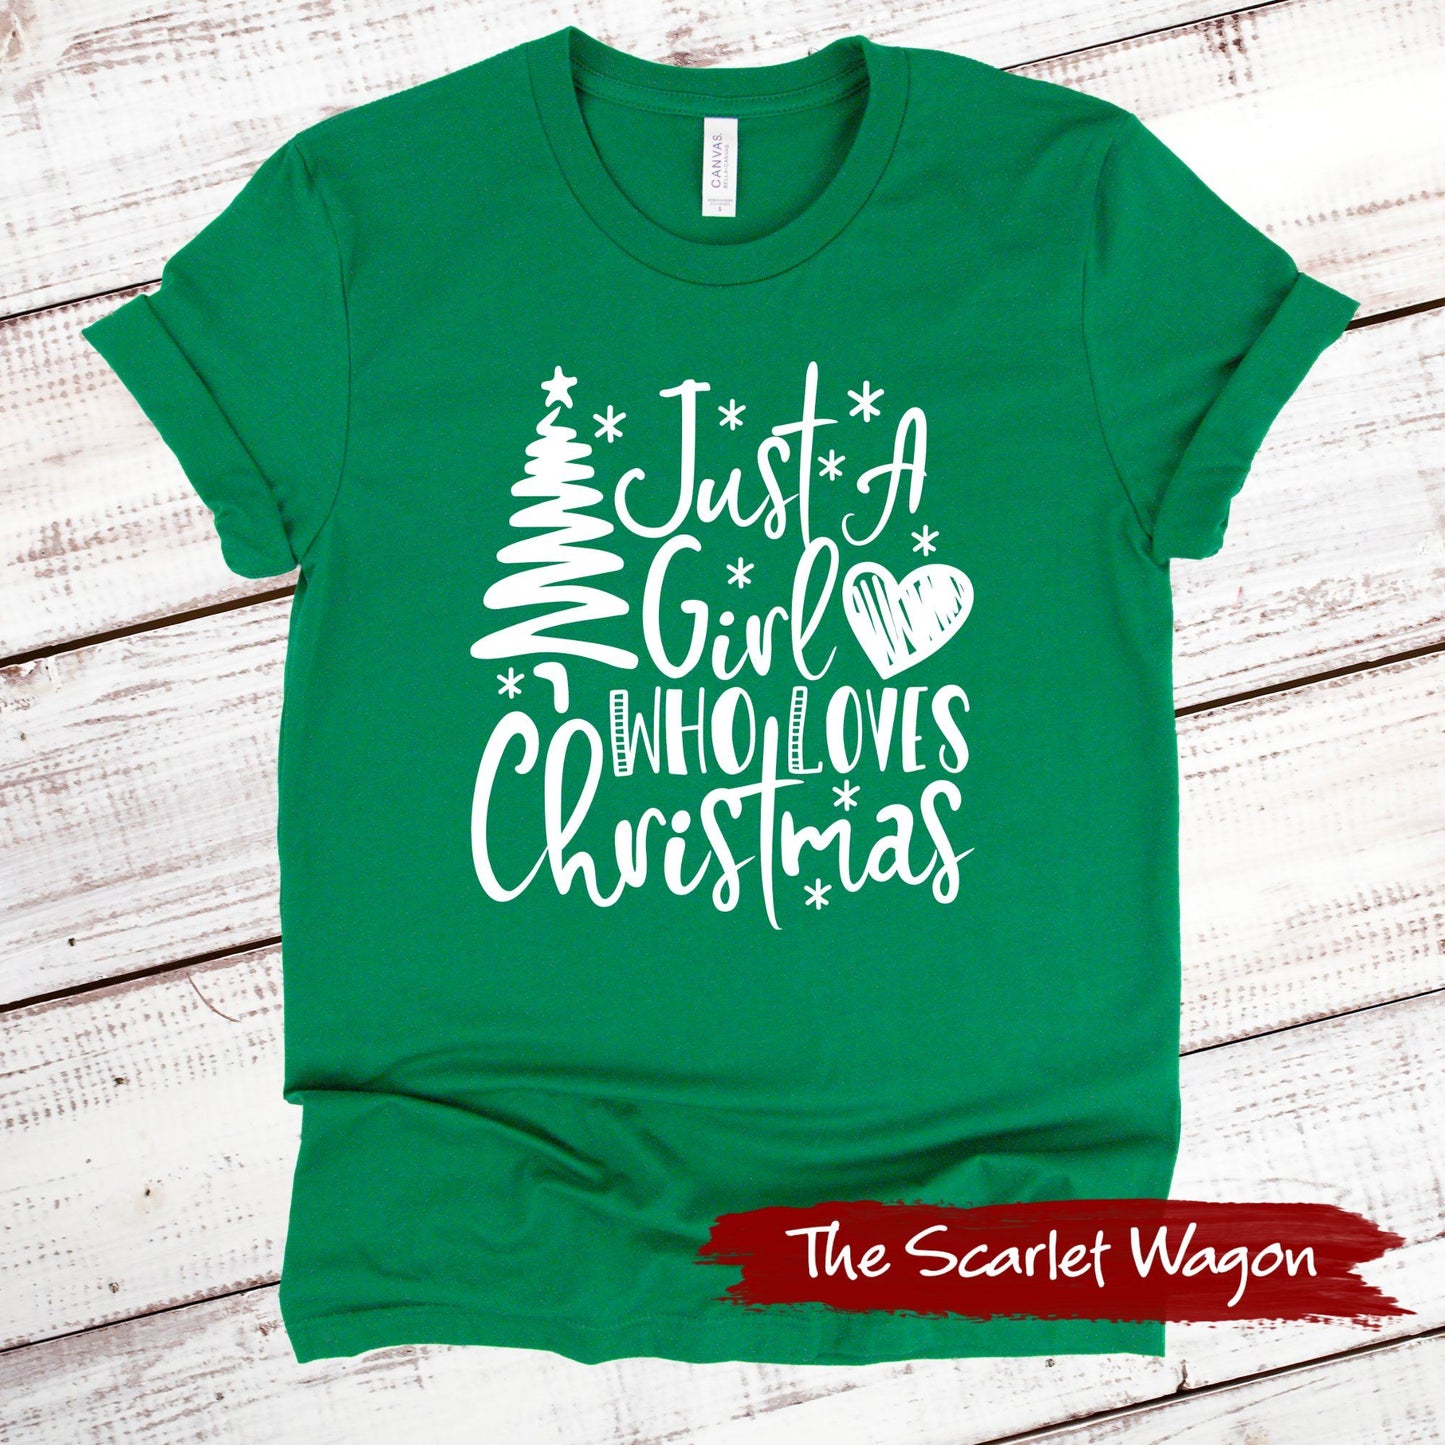 Just a Girl Who Loves Christmas Christmas Shirt Scarlet Wagon Green XS 